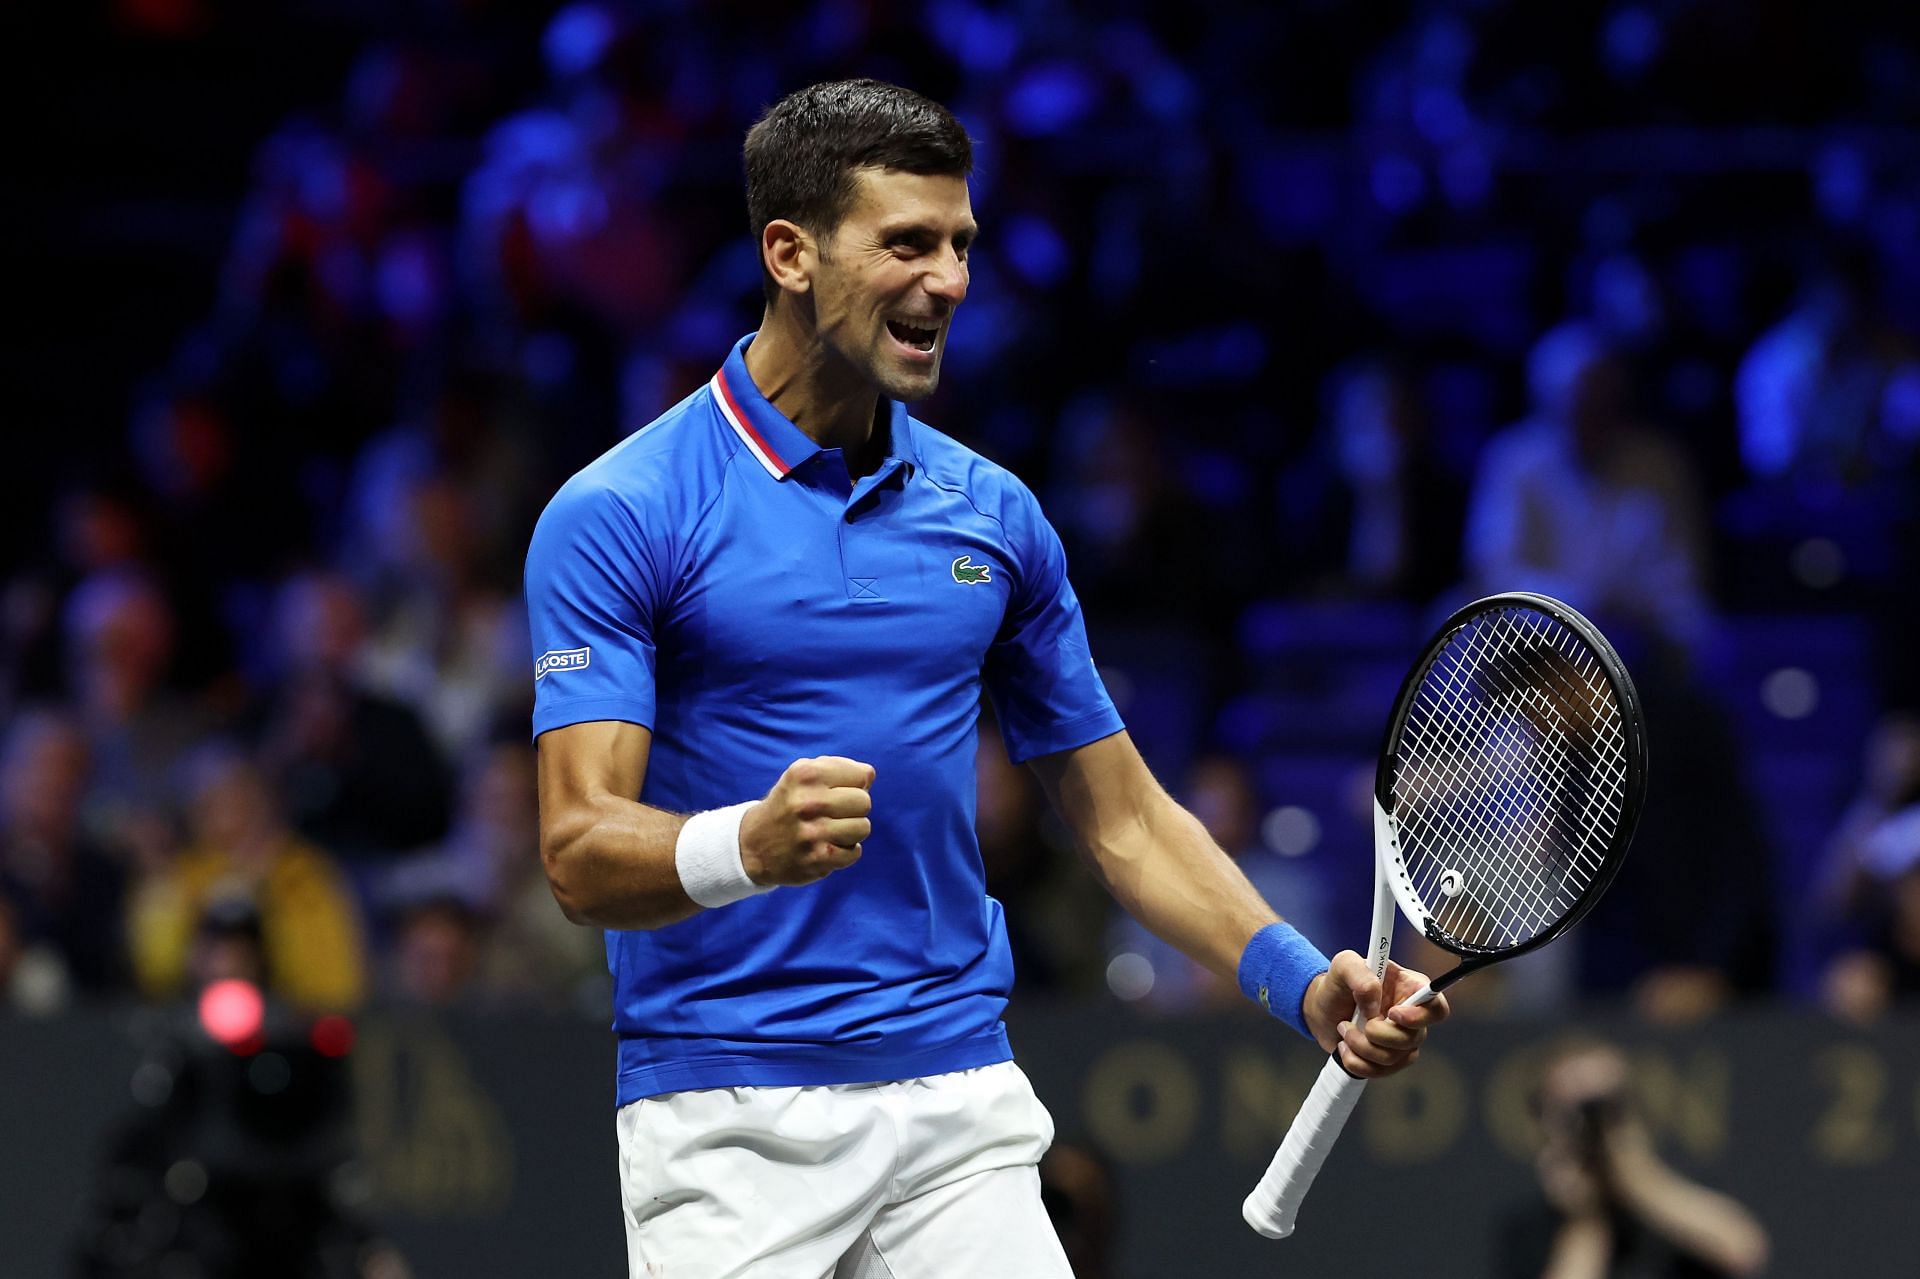 Novak Djokovic will face Roman Safiullin in the semifinals of the Tel Aviv Open